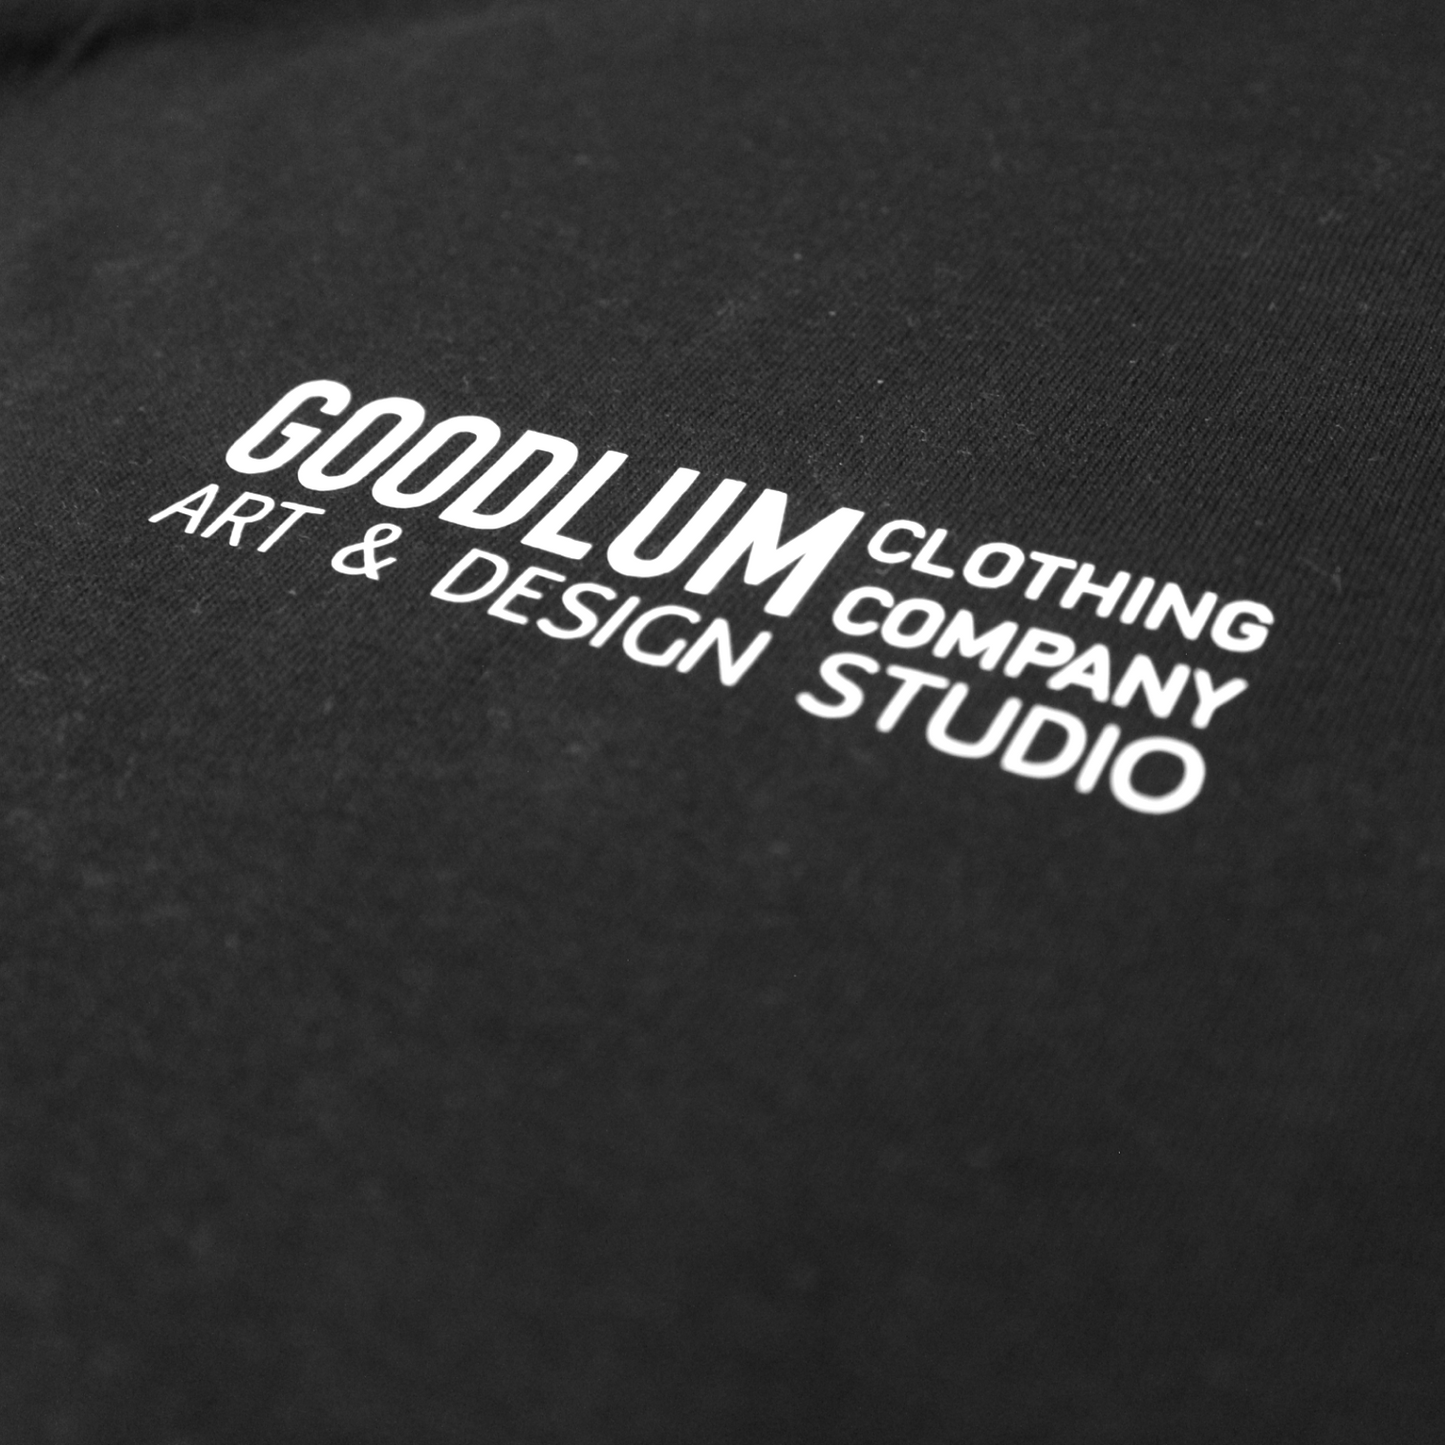 Art/Design Studio T Shirt